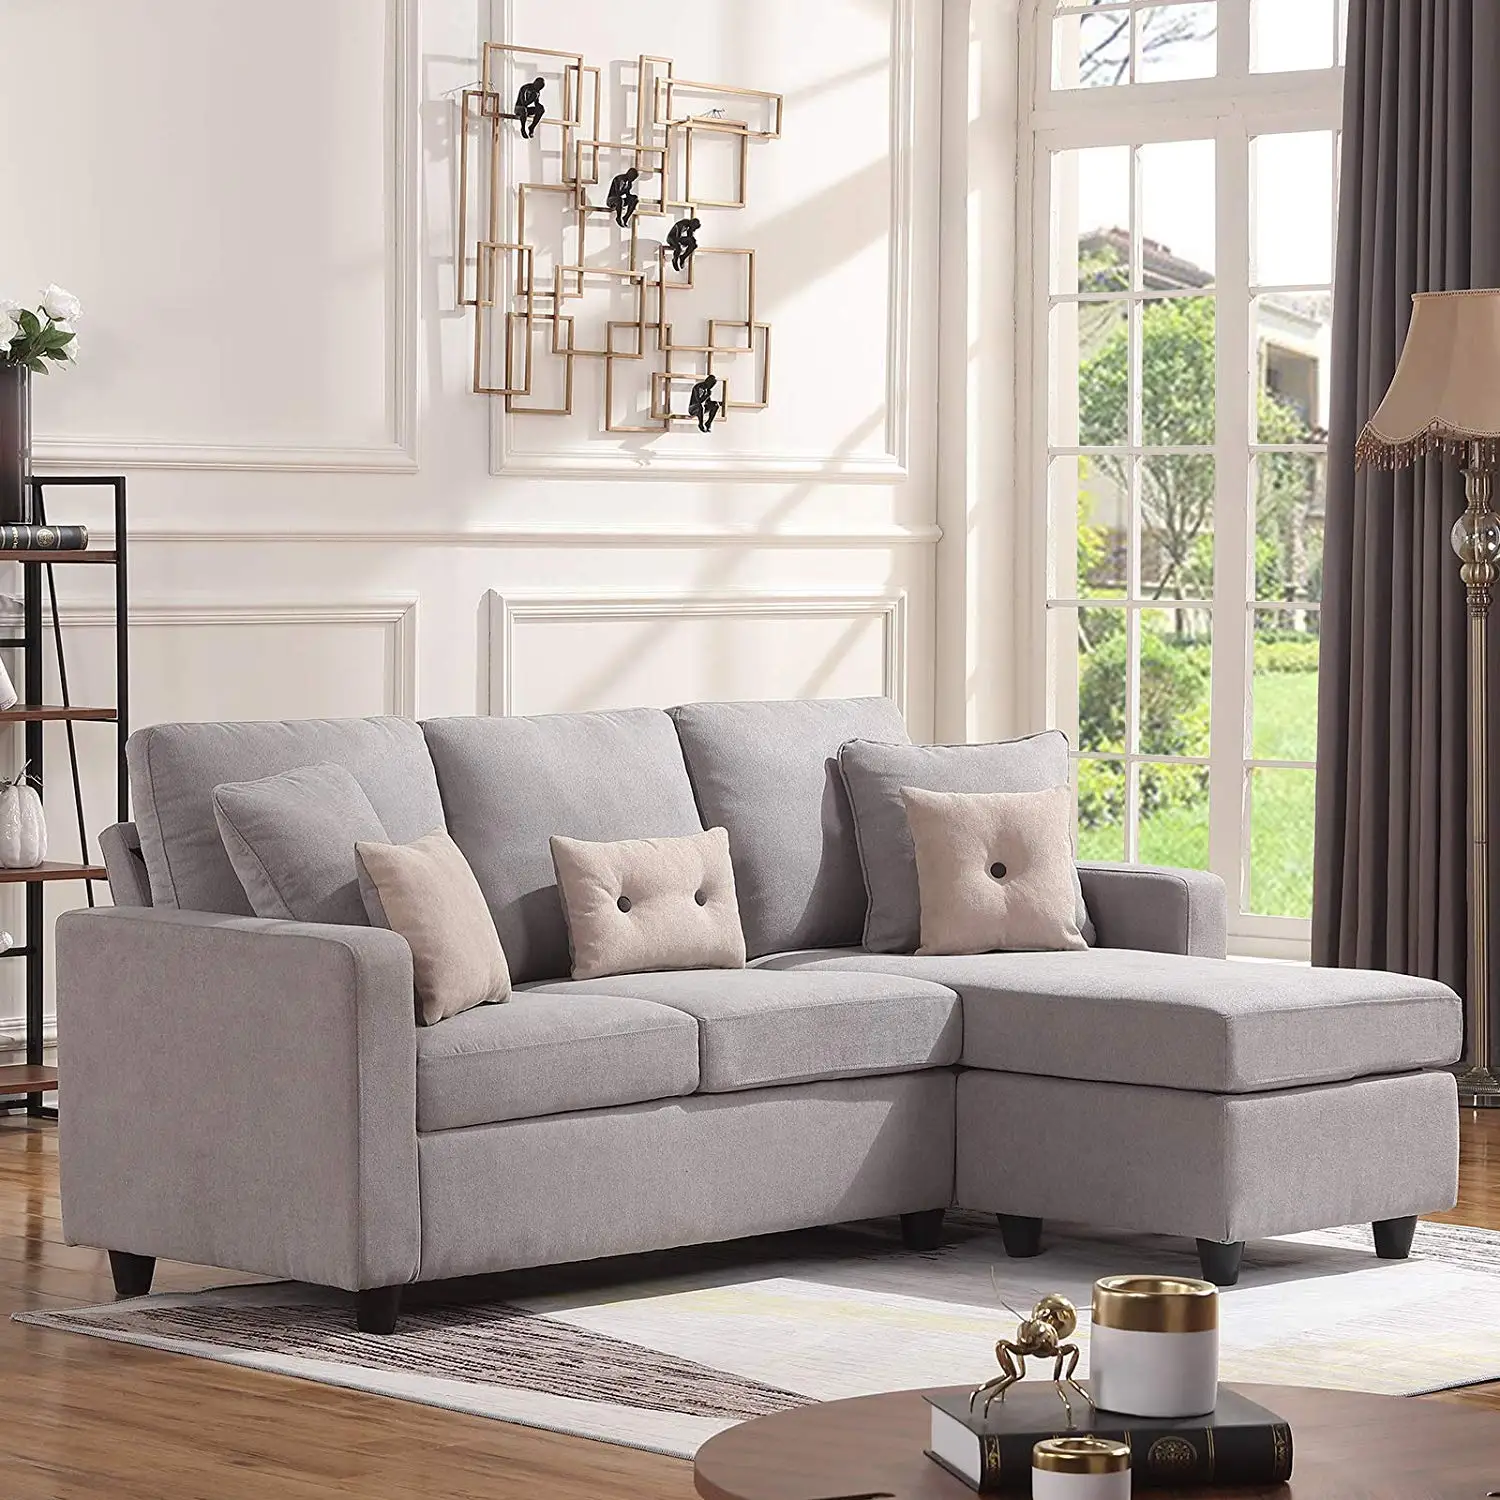 product-Natural wood furniture livingroom Luxury section modern simple sofa set-BoomDear Wood-img-1